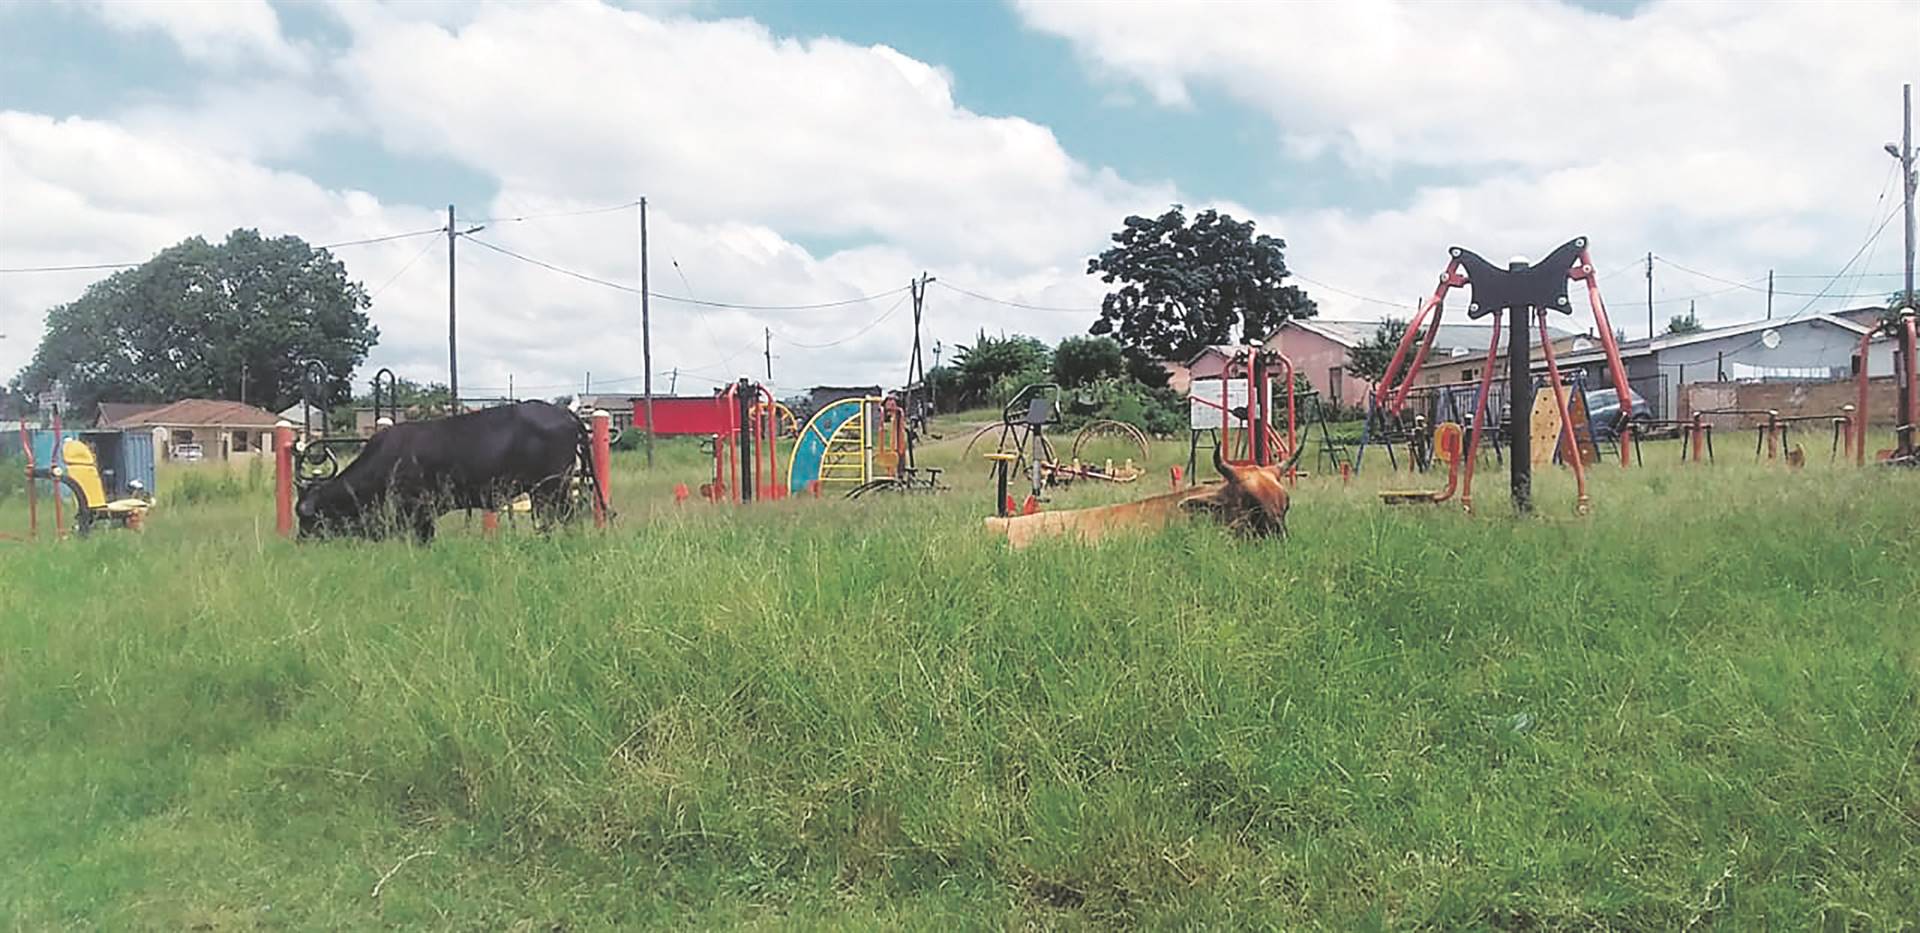 Cows graze at the gym park in Pietermaritzburg.  Photo by Mbali Dlungwana